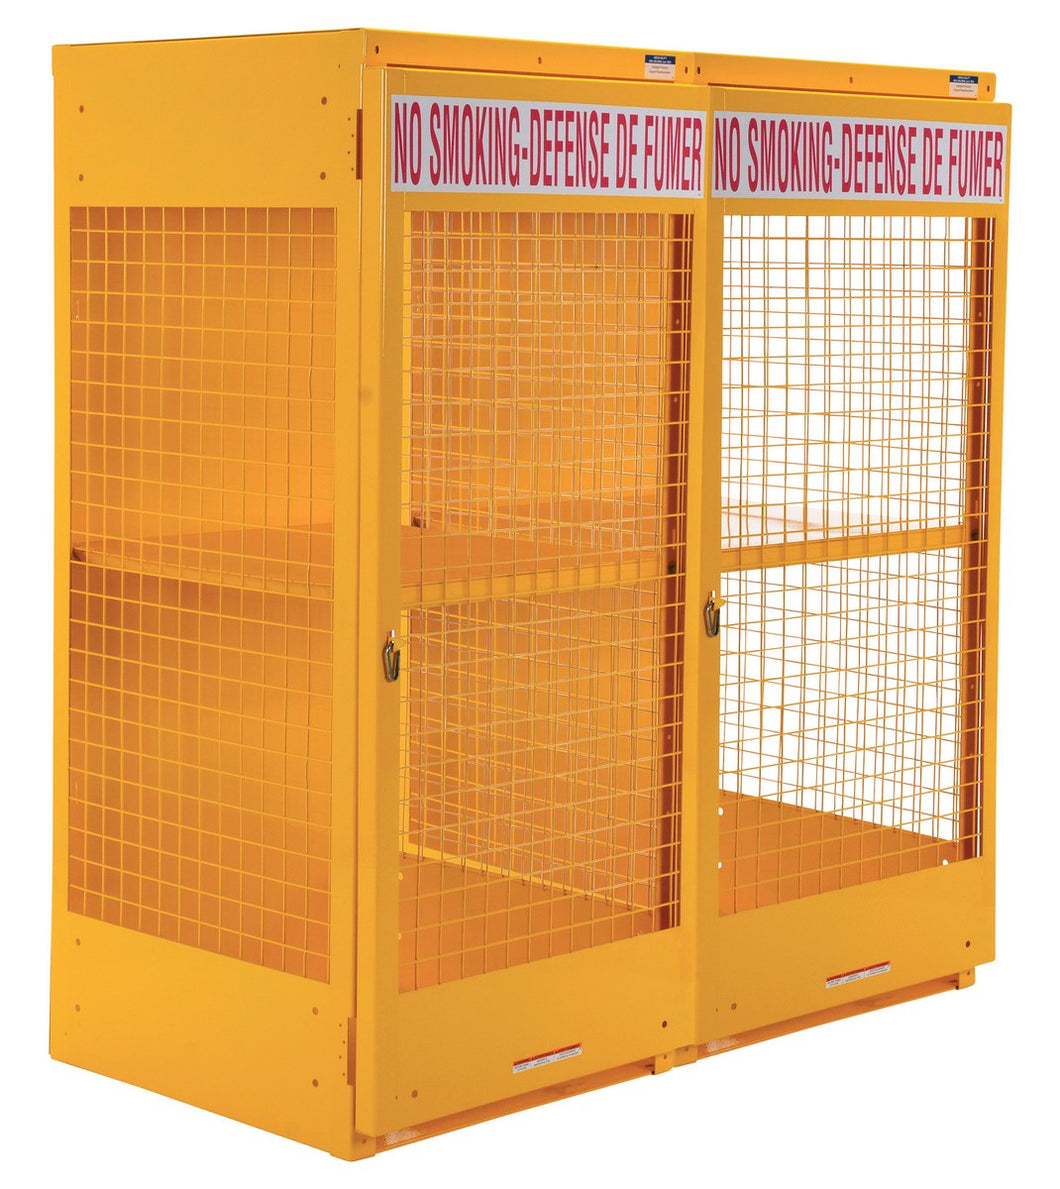 Cylinder Storage Cabinets (Canada sales)